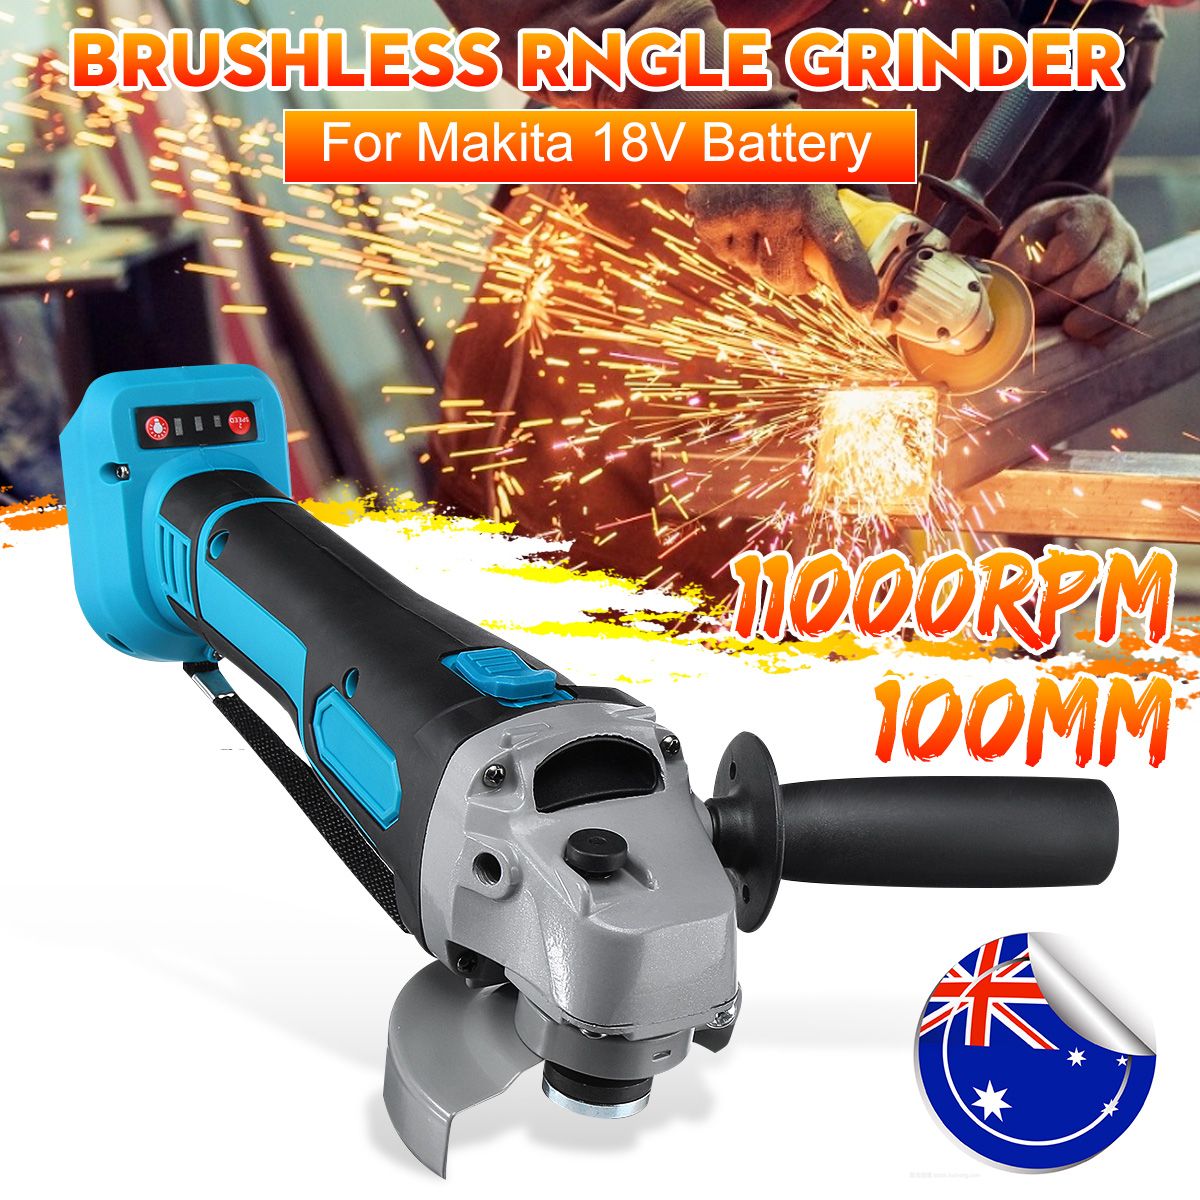 0-8500RPM-Cordless-Brushless-Angle-Grinder-100mm-Body-With-LED-Light-For-18V-Makita-Battery-1636660